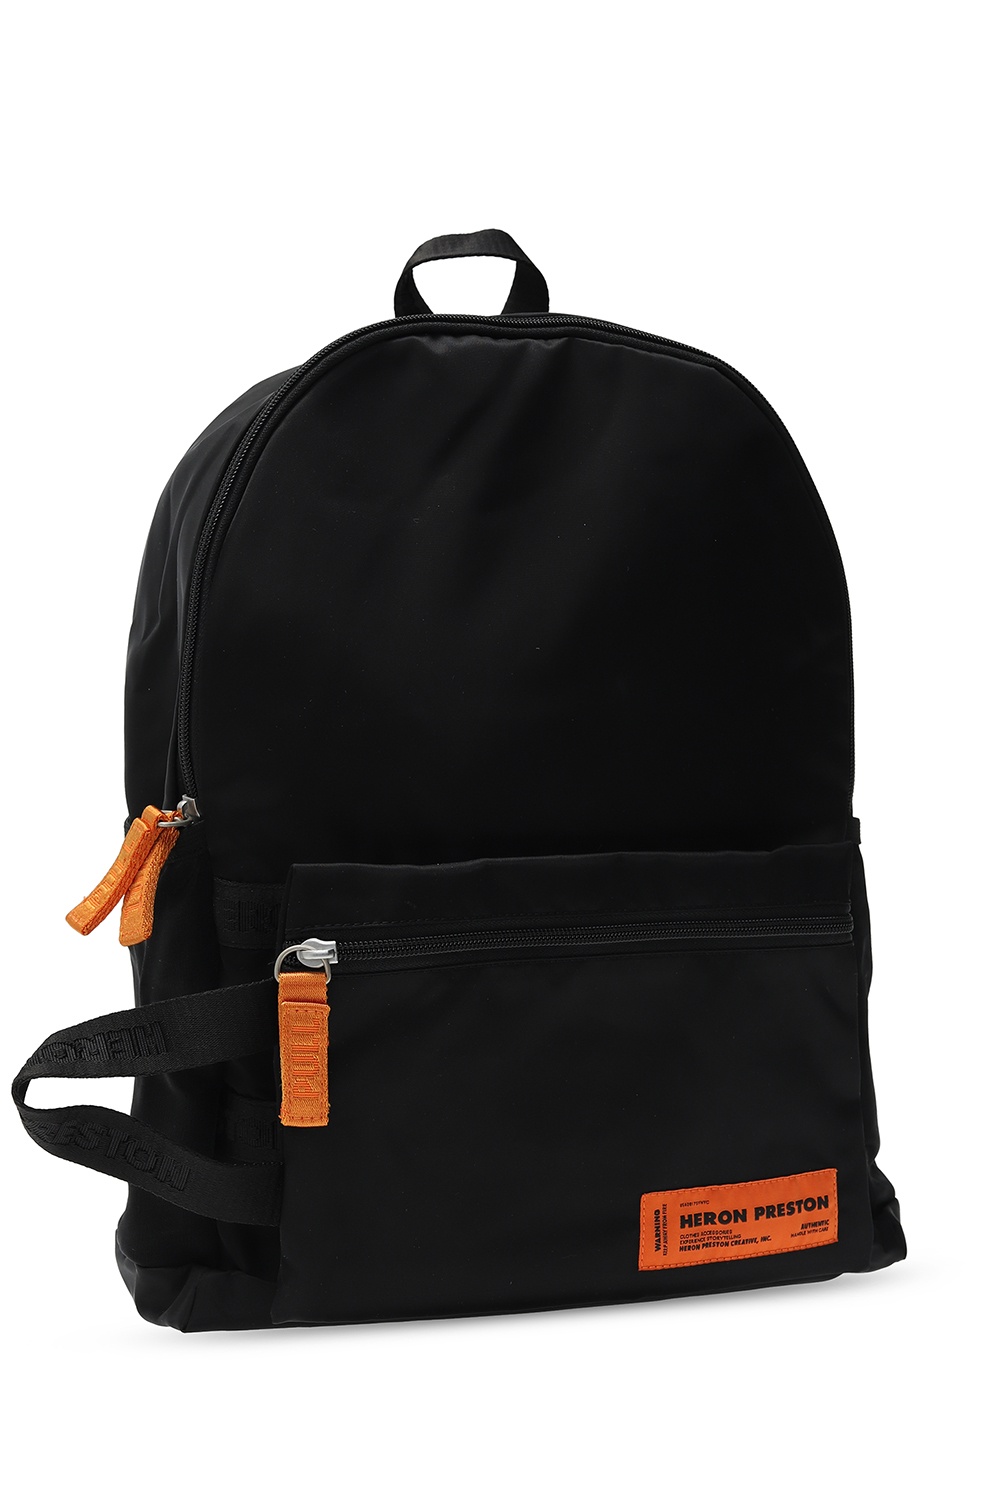 jacquard logo Strap You bag strap | Heron Preston Logo backpack 